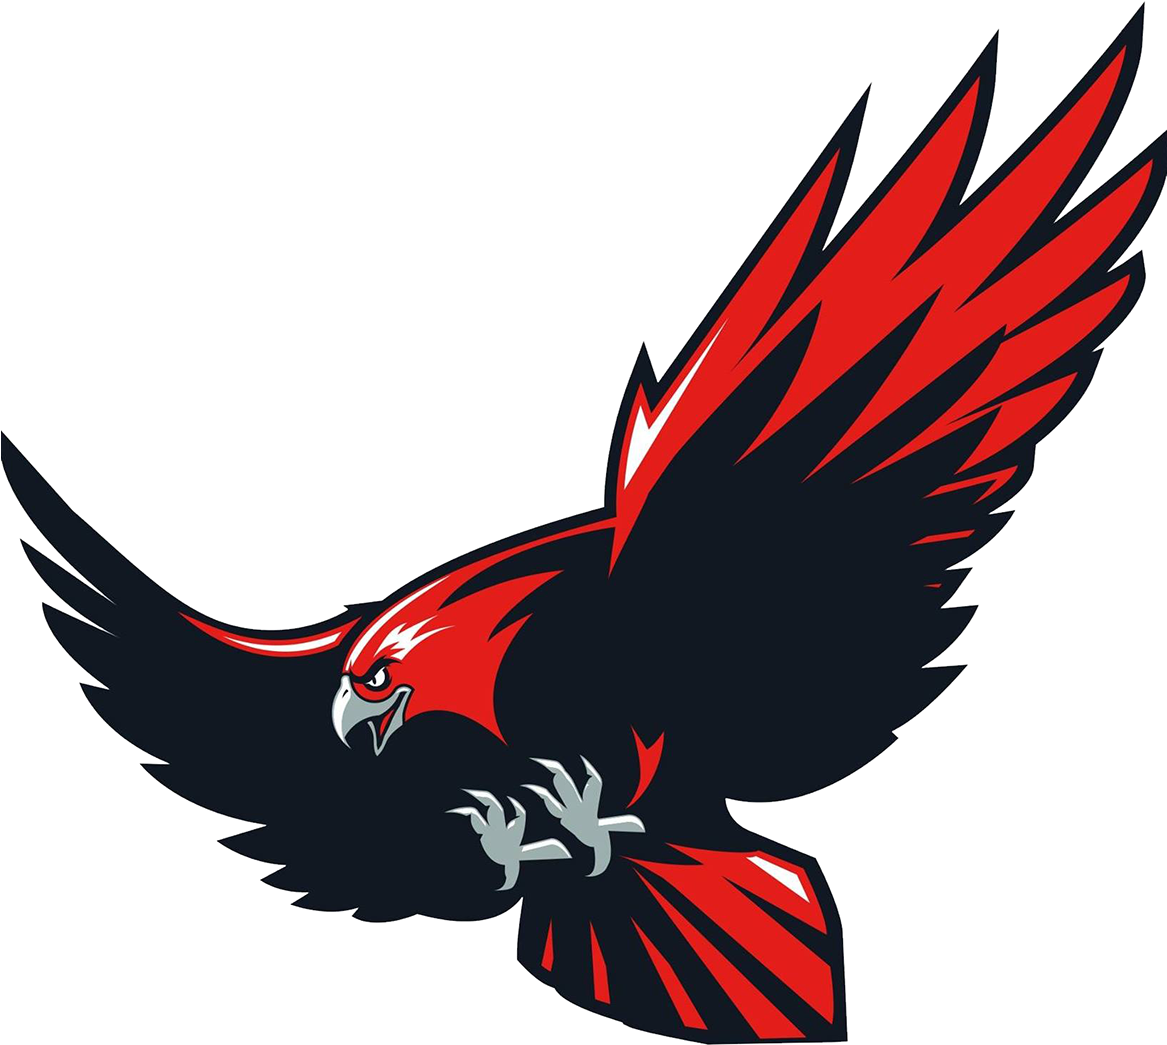 Hawks Men's Basketball - Howard College Hawks Logo (1166x1166)